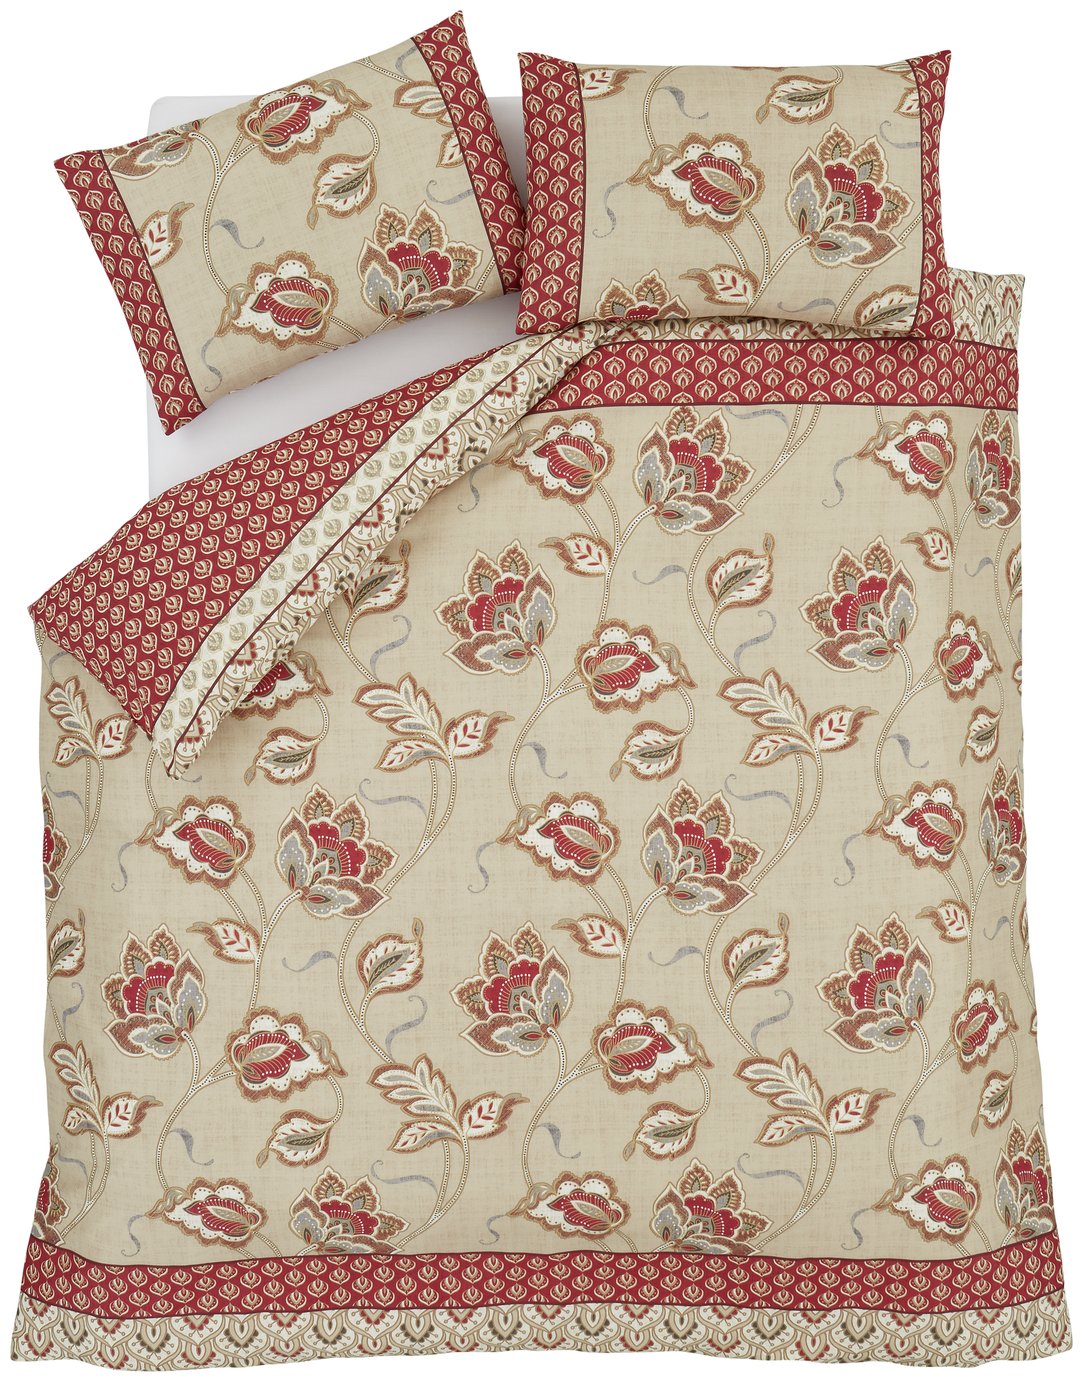 Catherine Lansfield Kashmir Cotton Bedspread - Multi